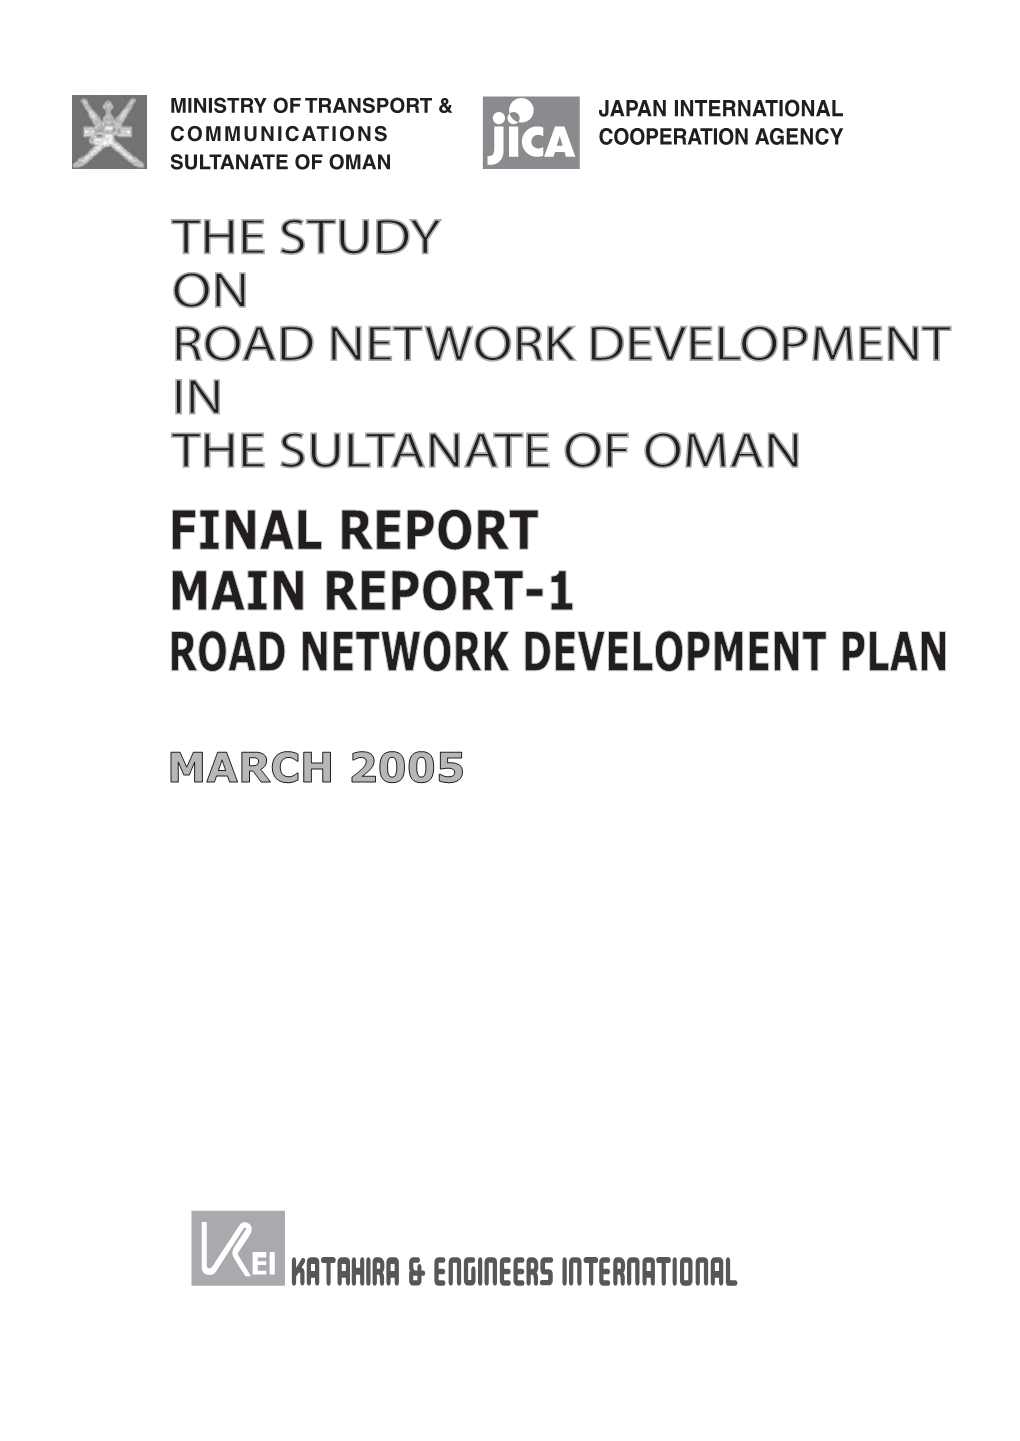 Final Report Main Report-1 Road Network Development